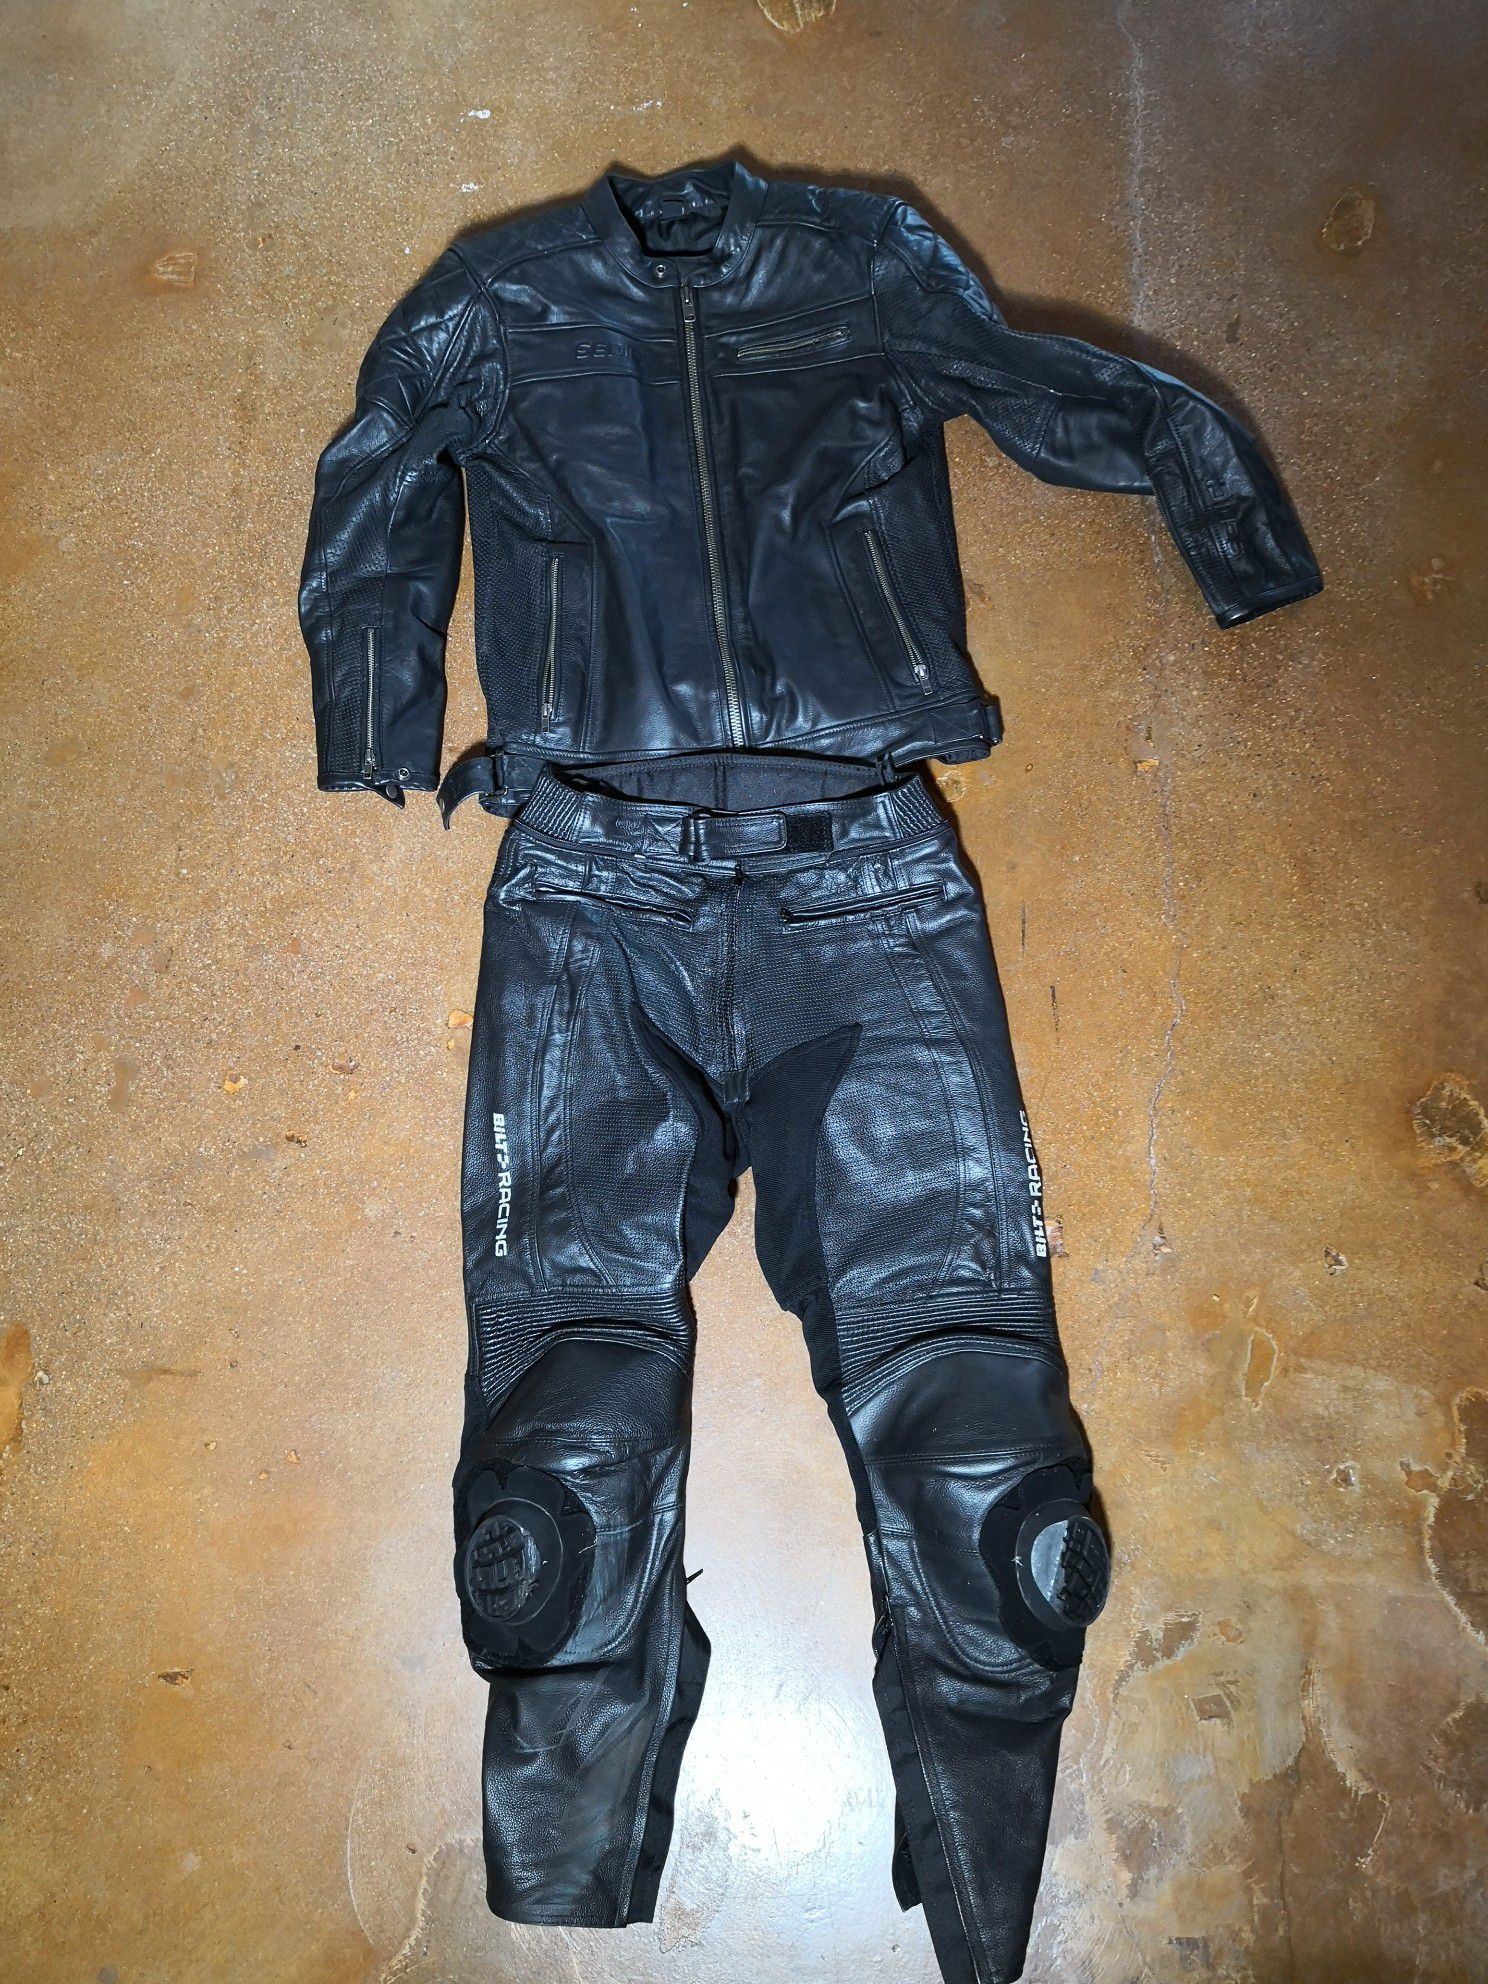 Sedici Motorcycle Leather Jacket (US 42), Pants (US 32), Boots (US 9)